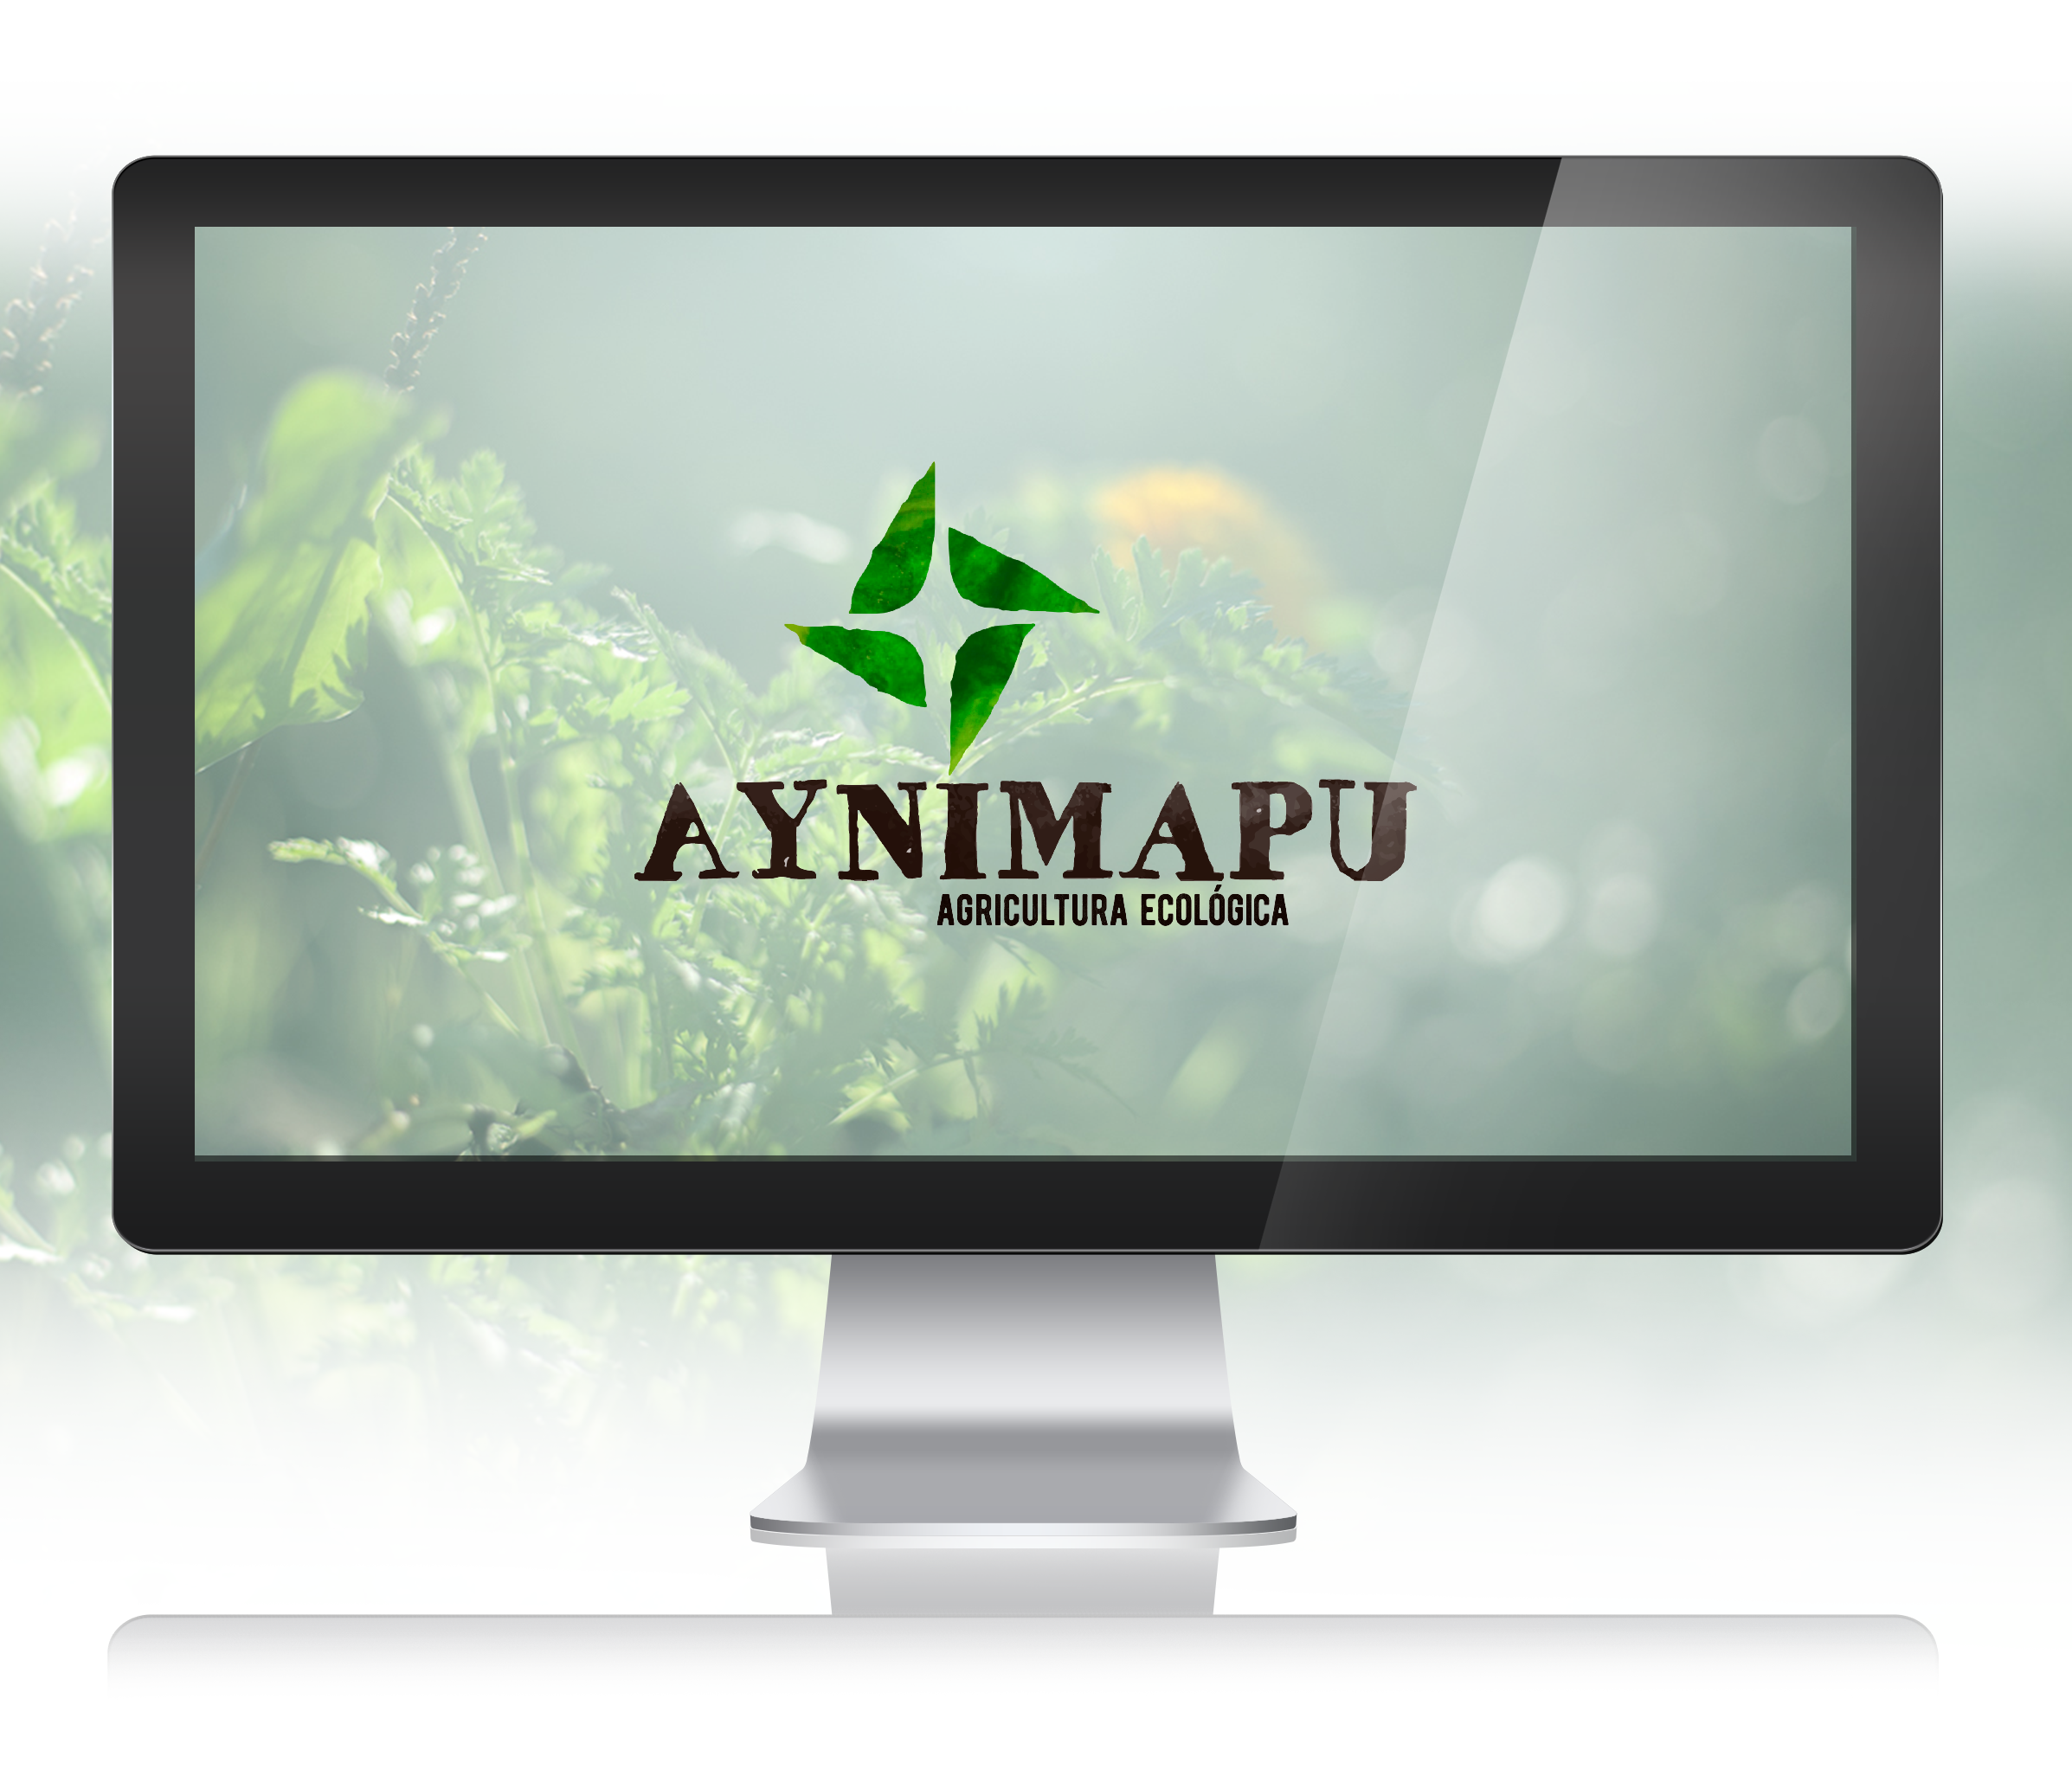 aynimapy-logo-imac-cf-up-03